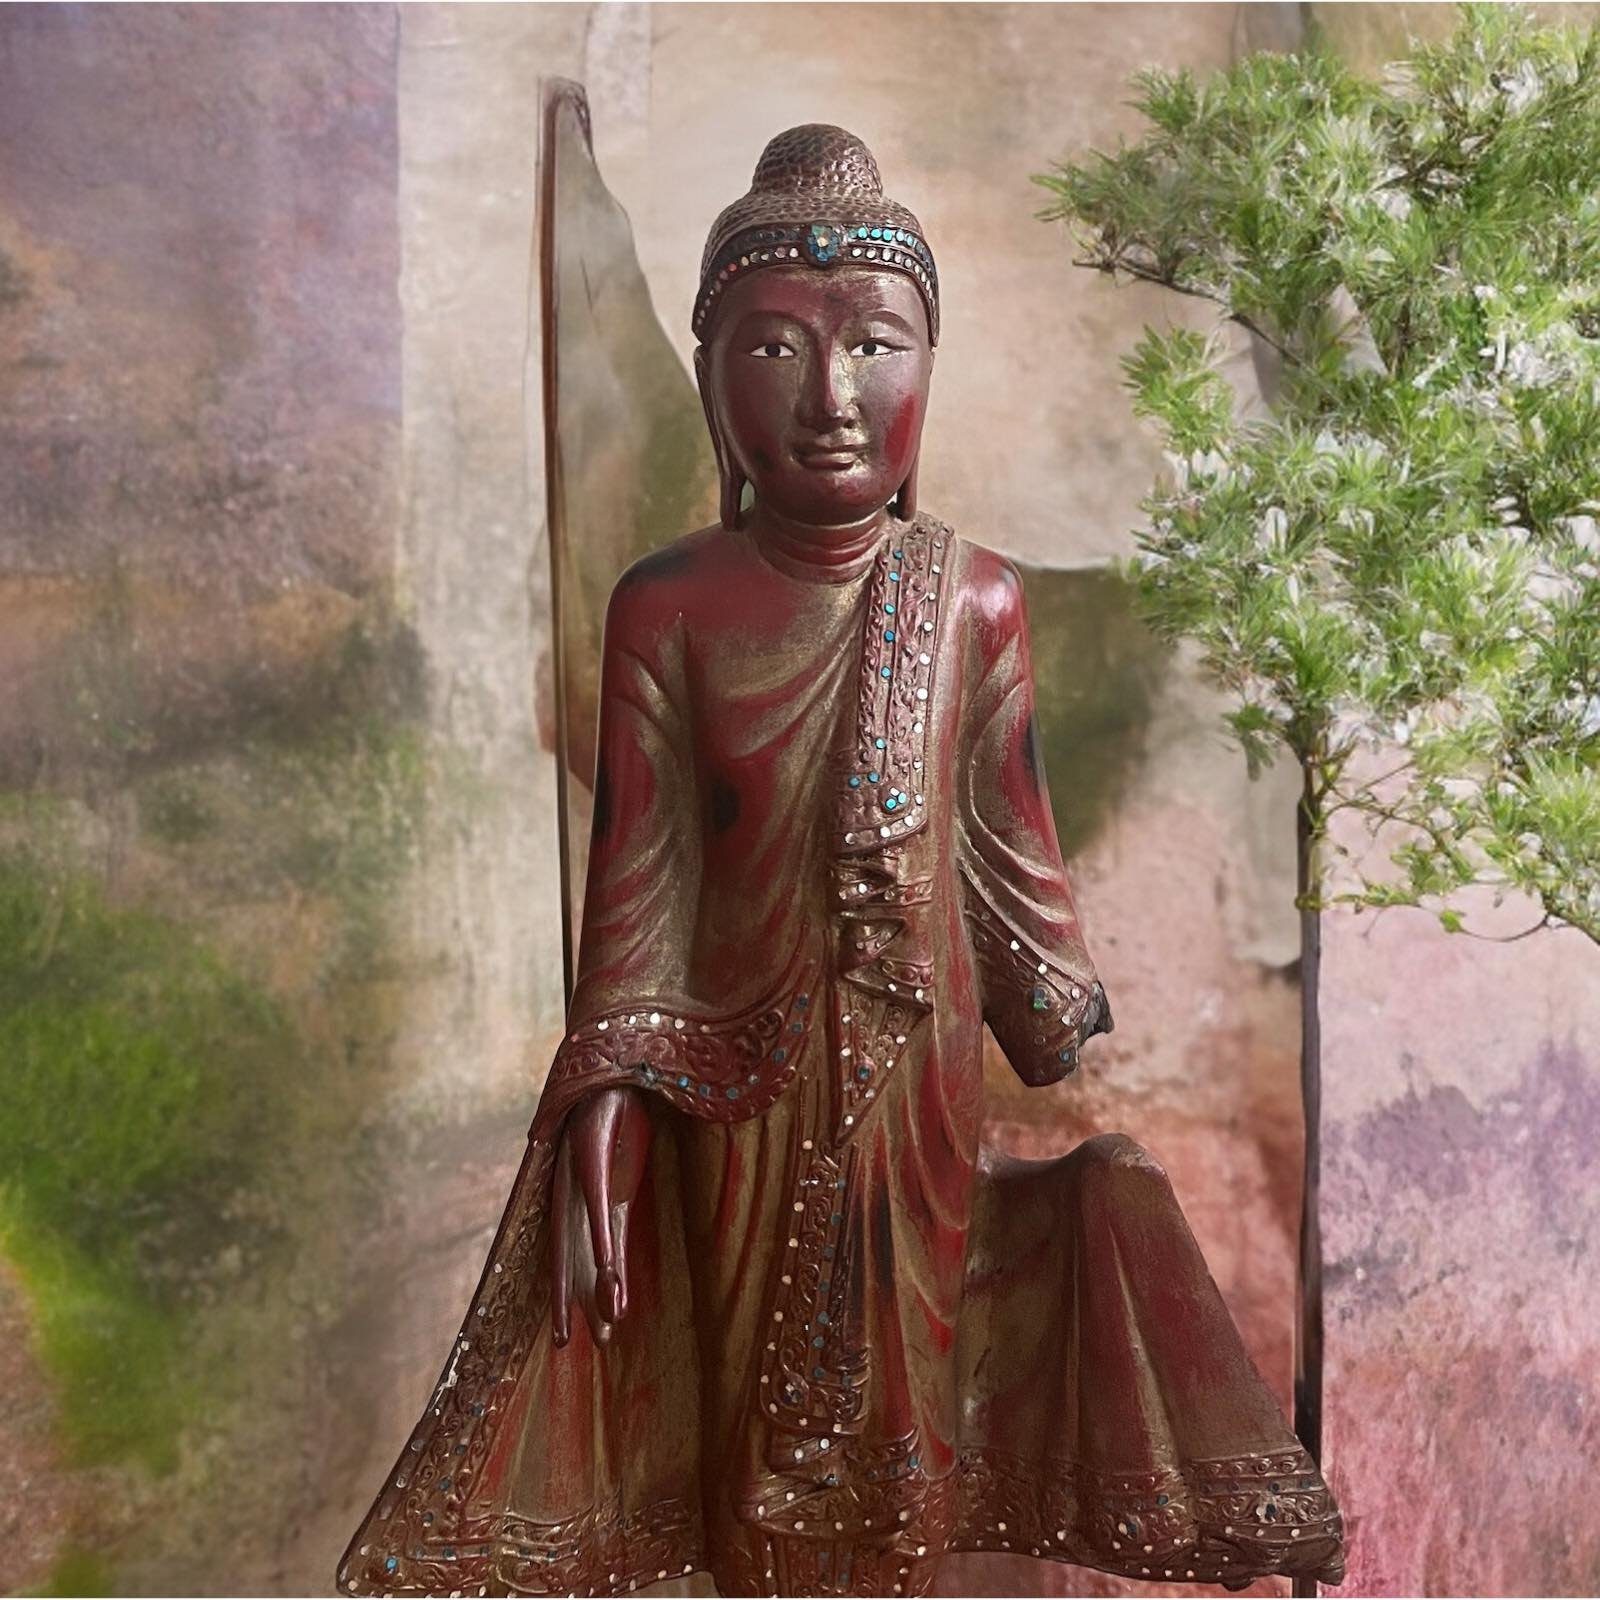 Holz - - Figur Asien Buddha stehend LifeStyle Thailand Rot Buddhafigur Burma,